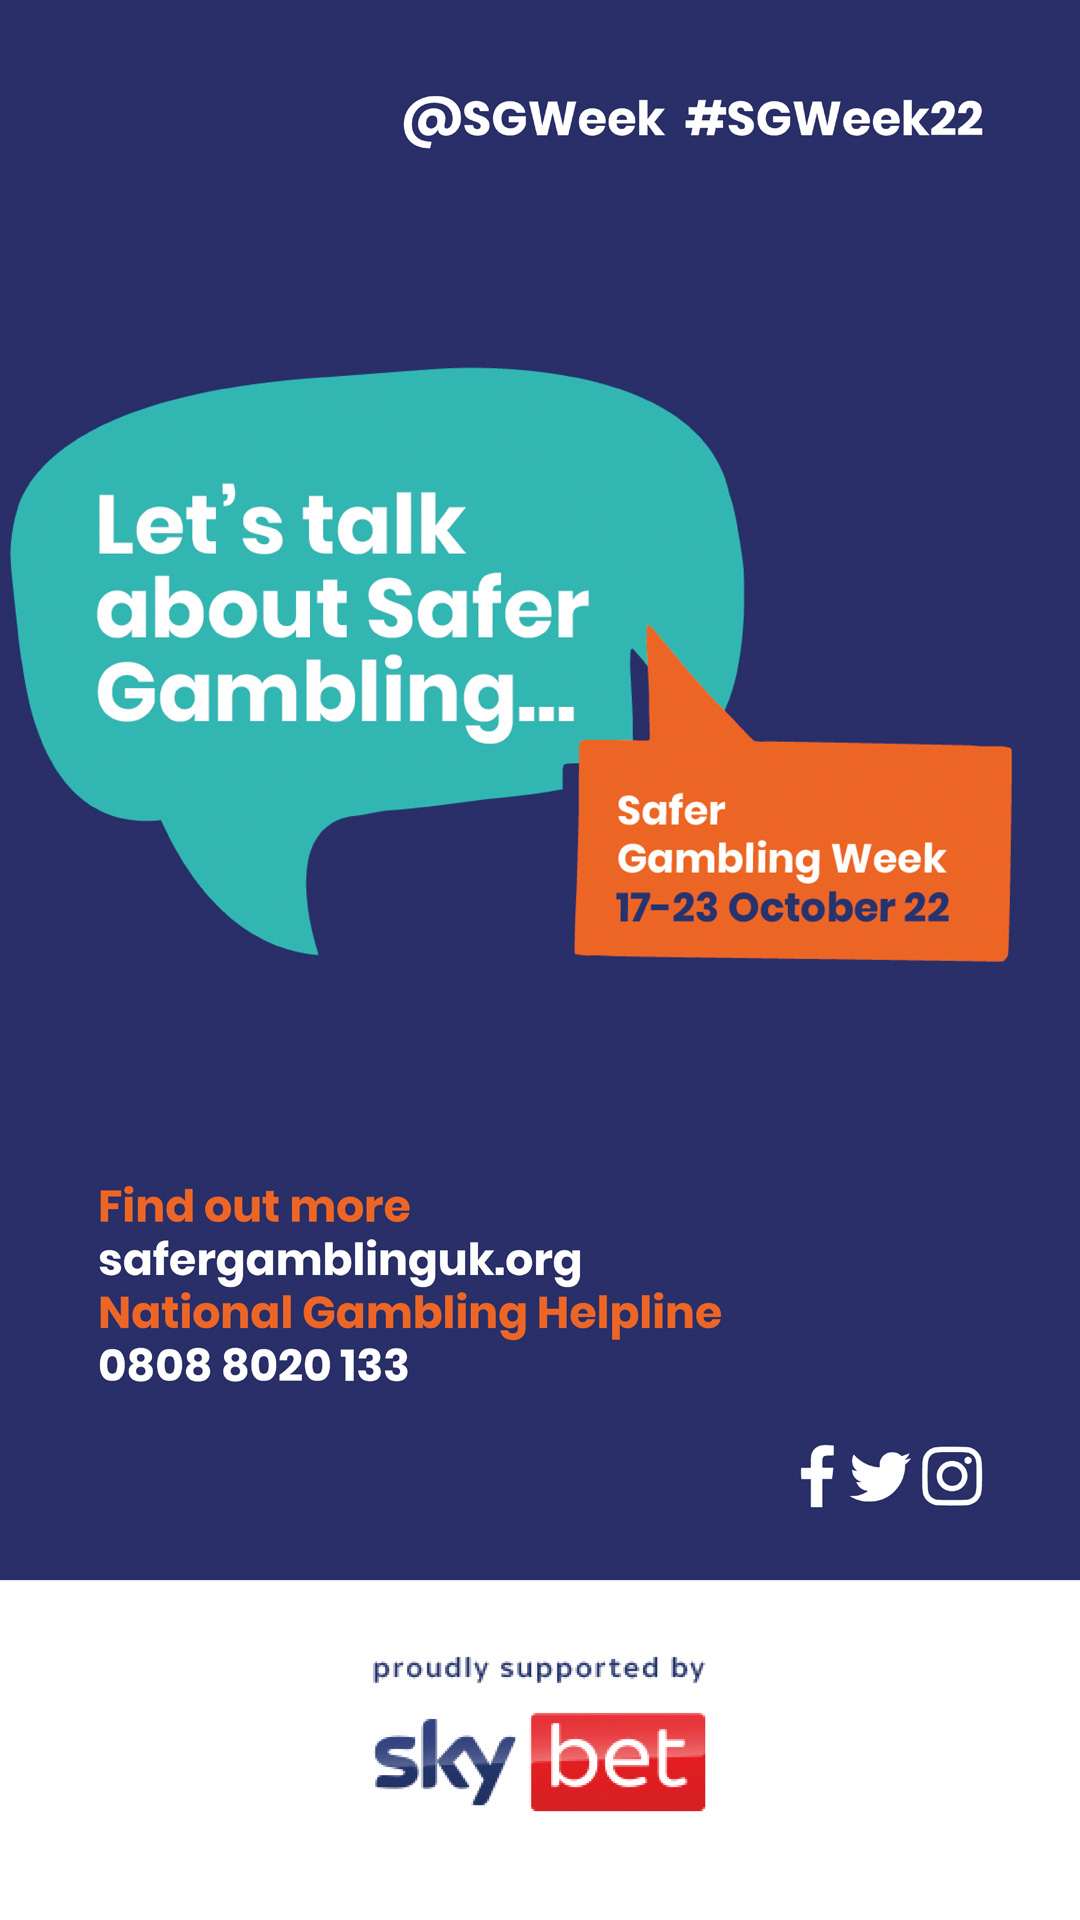 Sky Bet - Safer Gambling Week - Let's talk about safer gambling - safergamblinguk.org - 08088020133